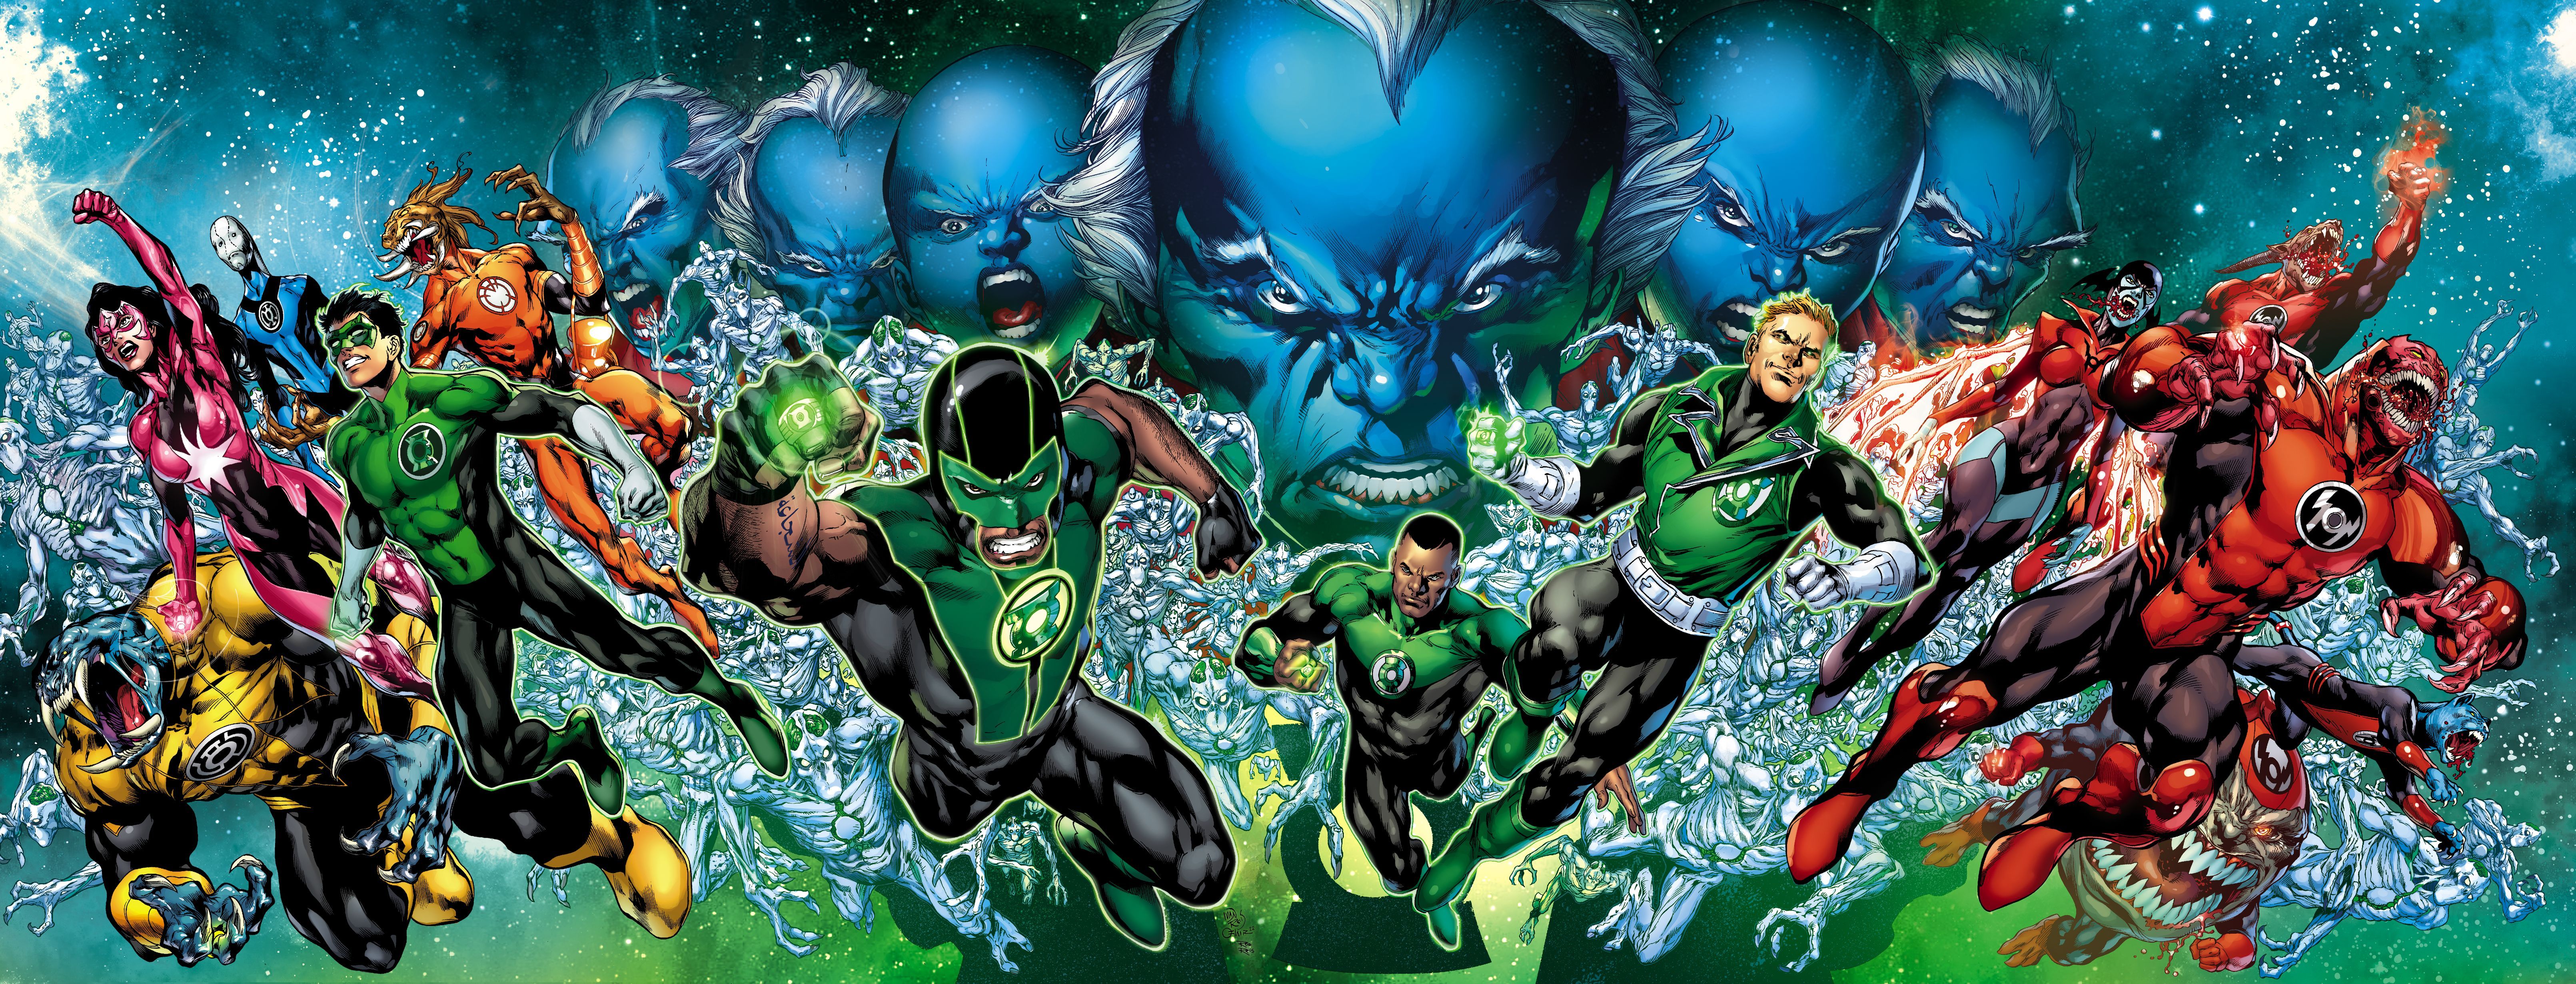 Green Lantern Corps Wallpaper Free Green Lantern Corps